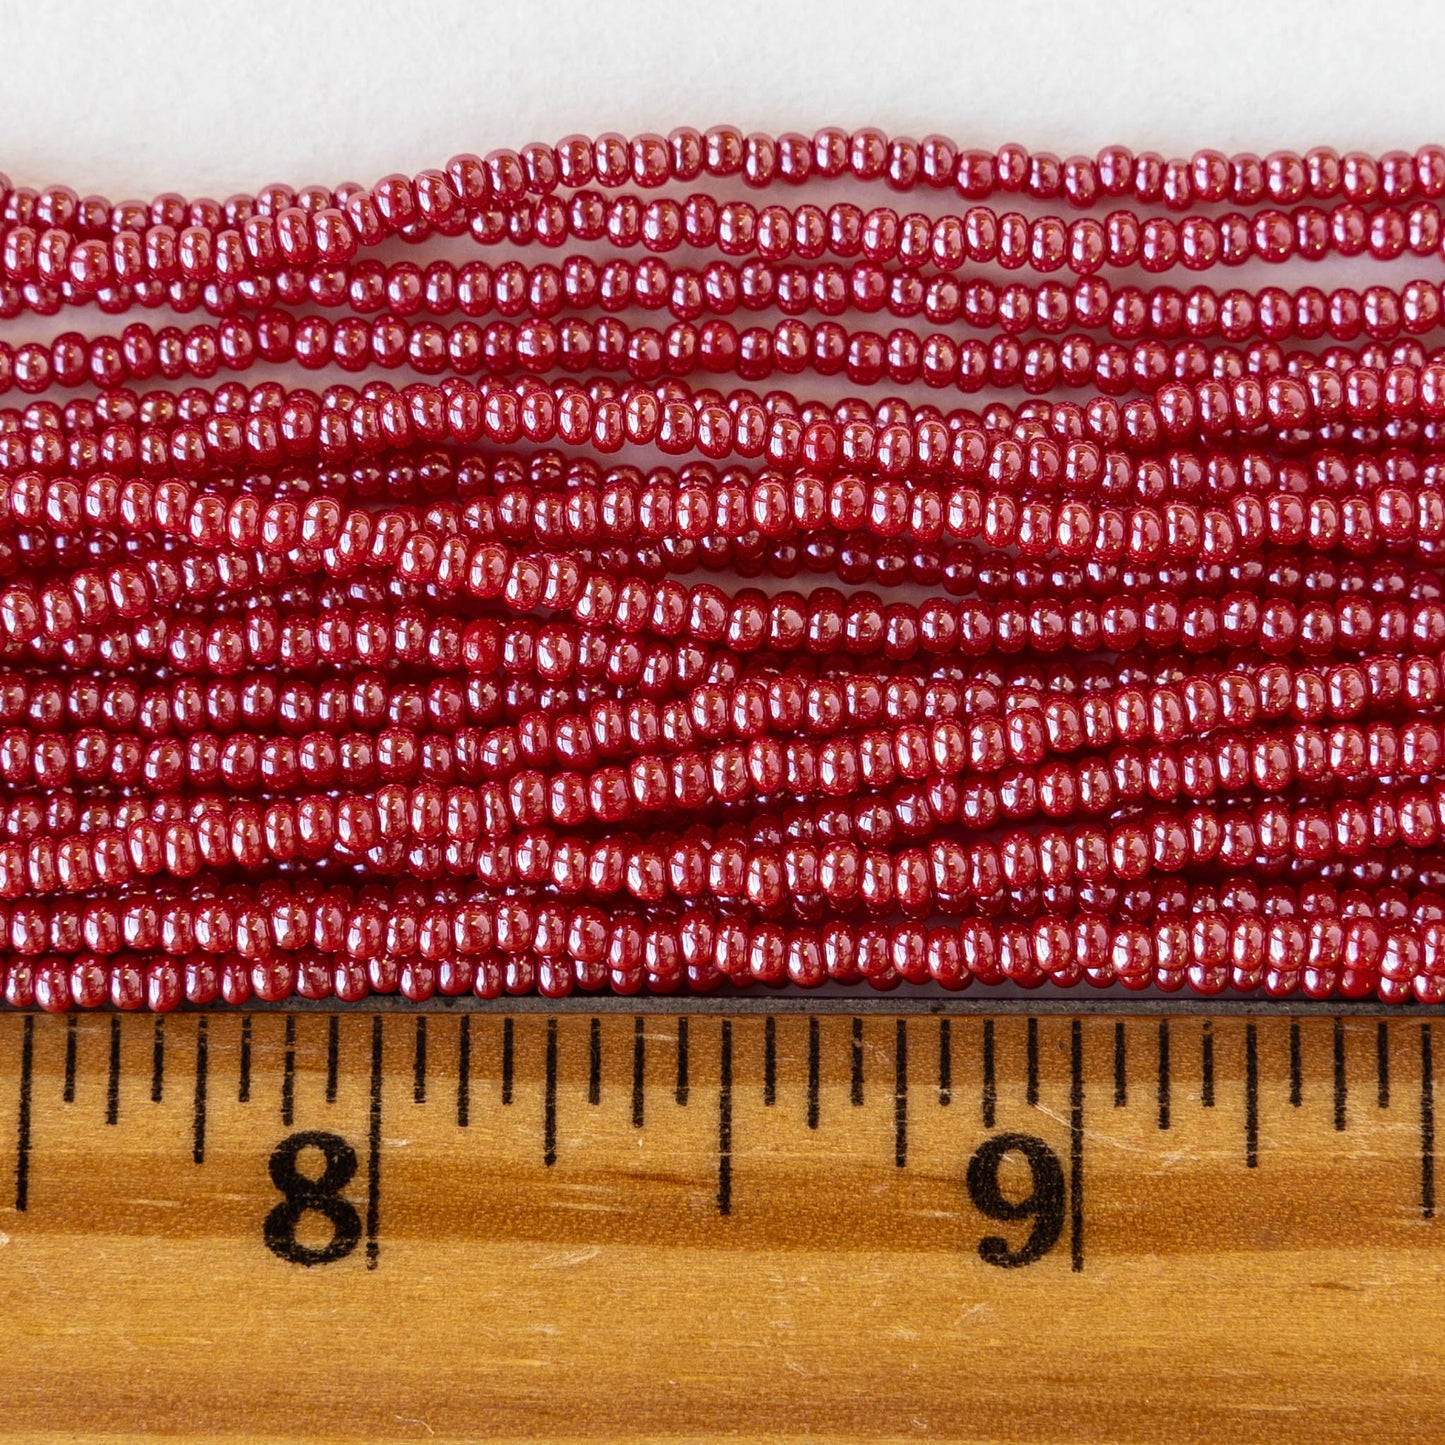 Czech Seed Bead 11/0 (2mm) Beads Opaque Red Beads